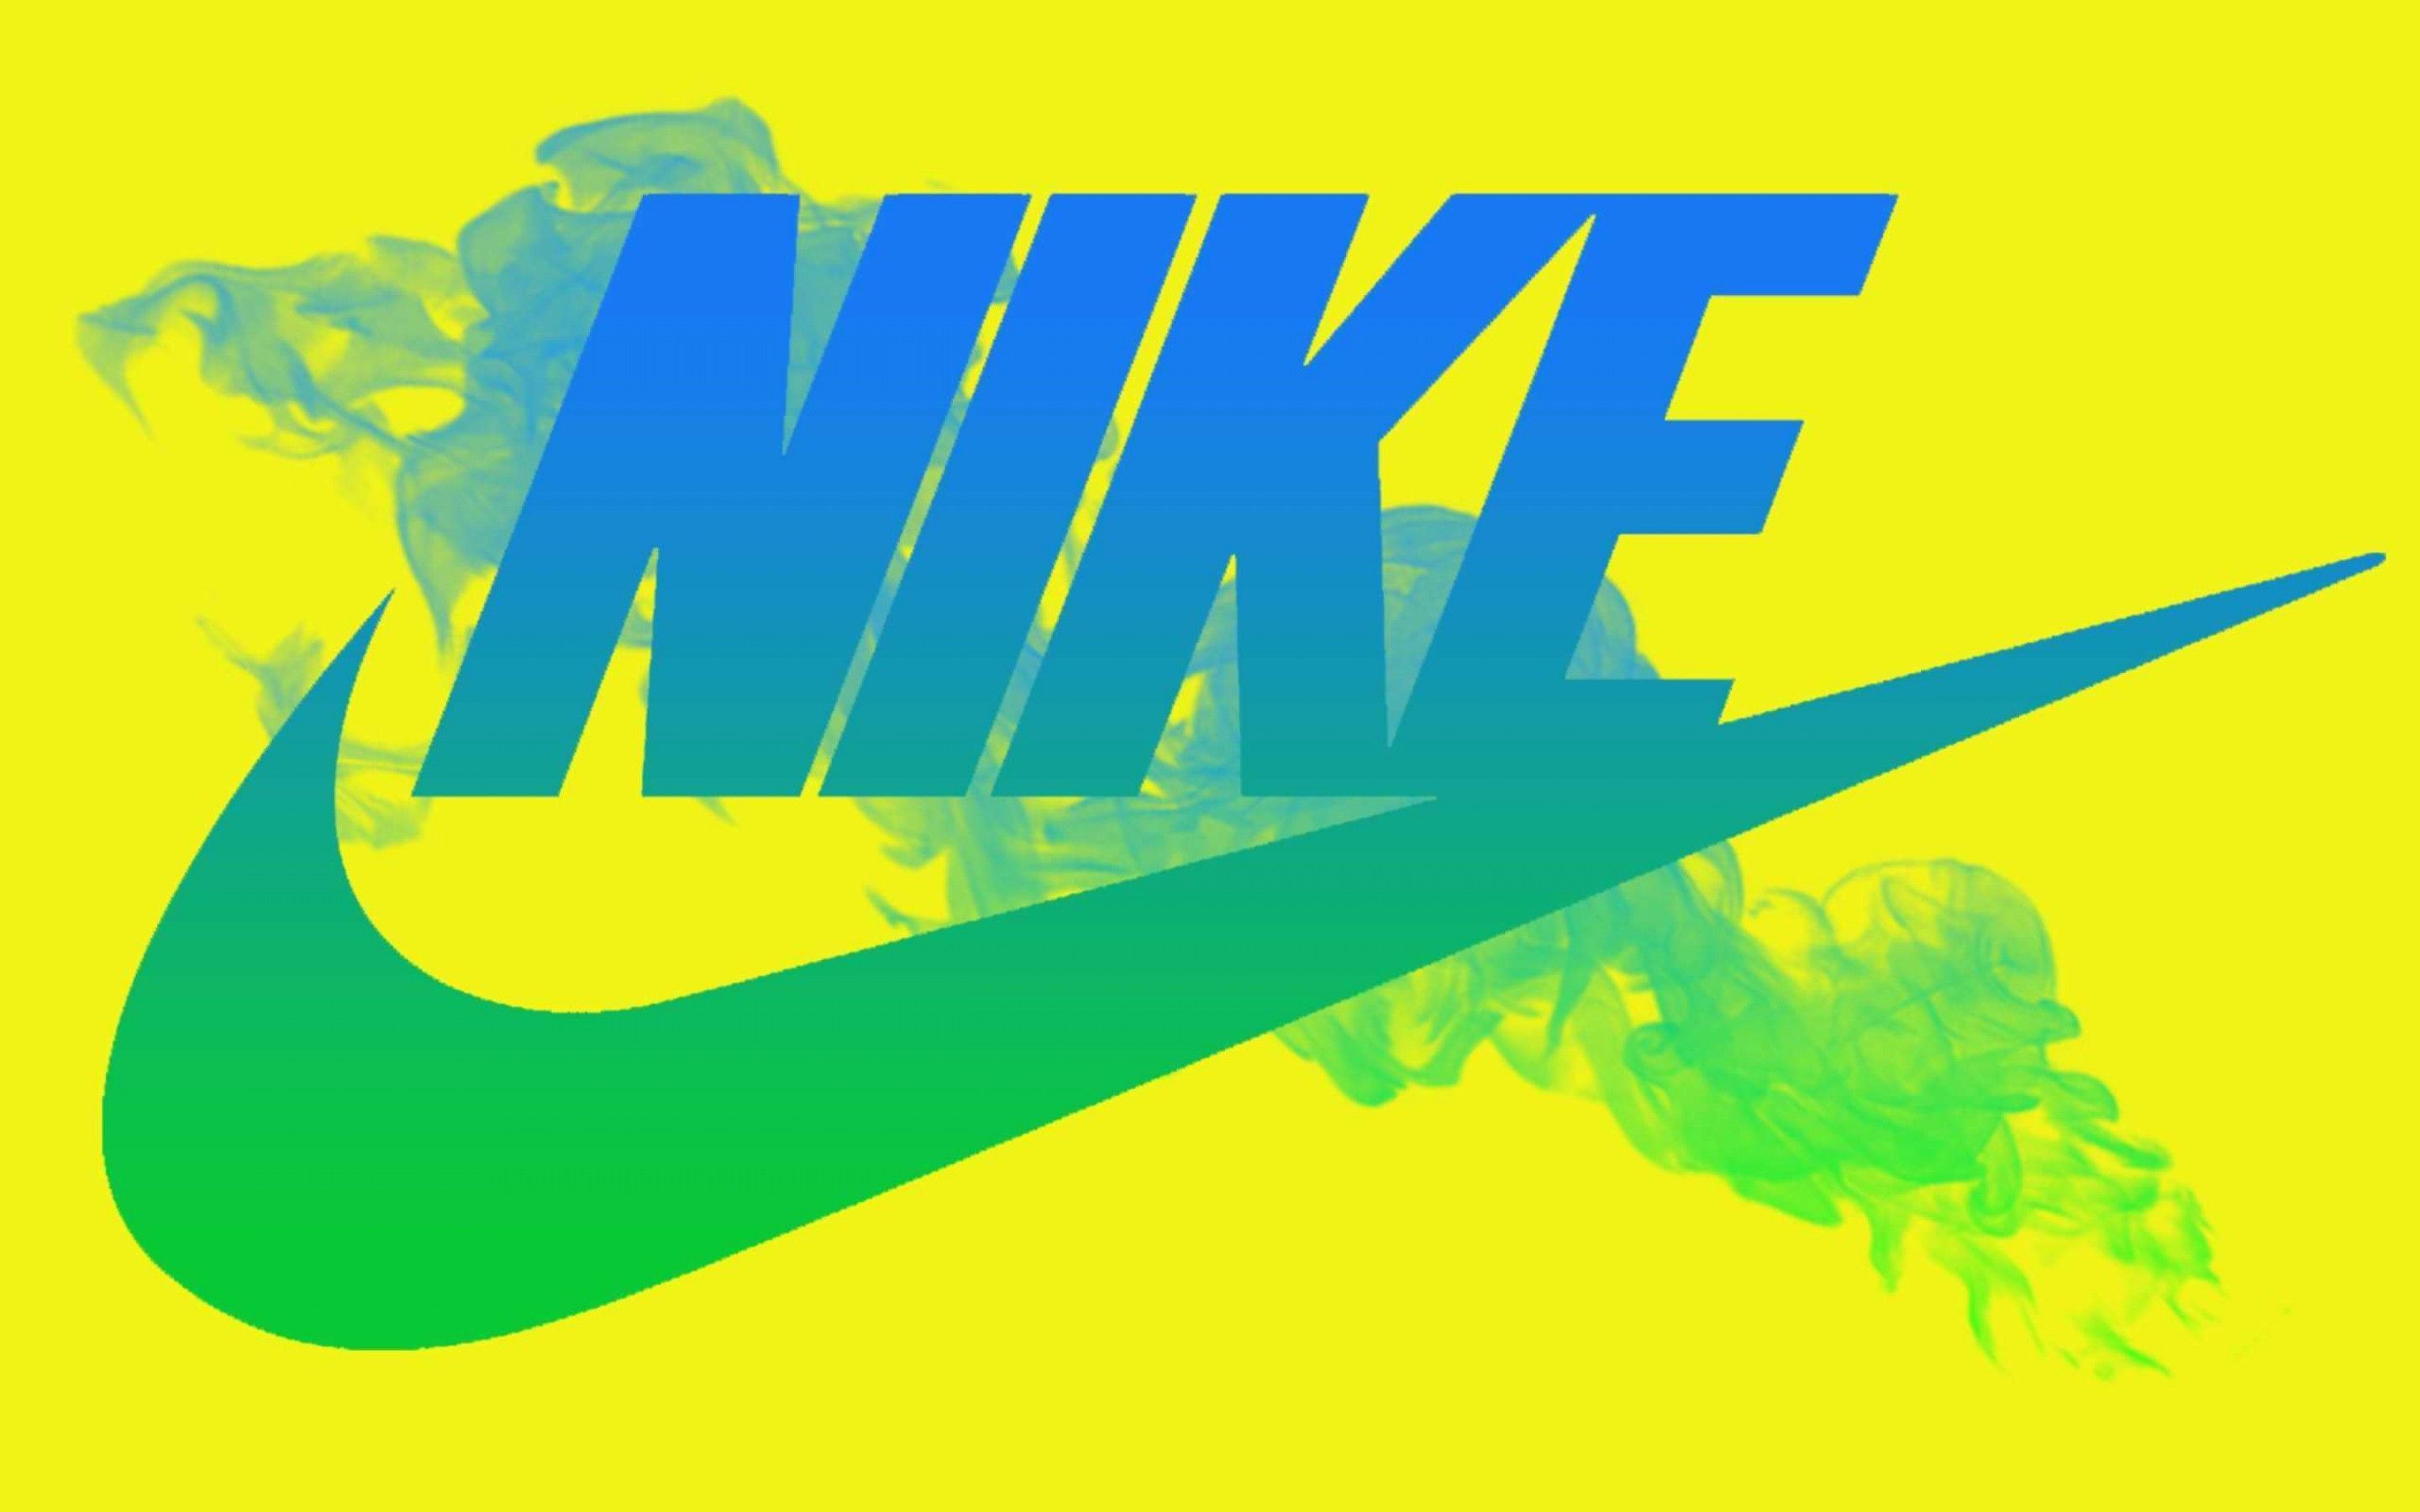 Blue Nike Logo Yellow Background Wallpaper Ful Wallpaper. Cool nike logos, Nike logo wallpaper, Nike wallpaper